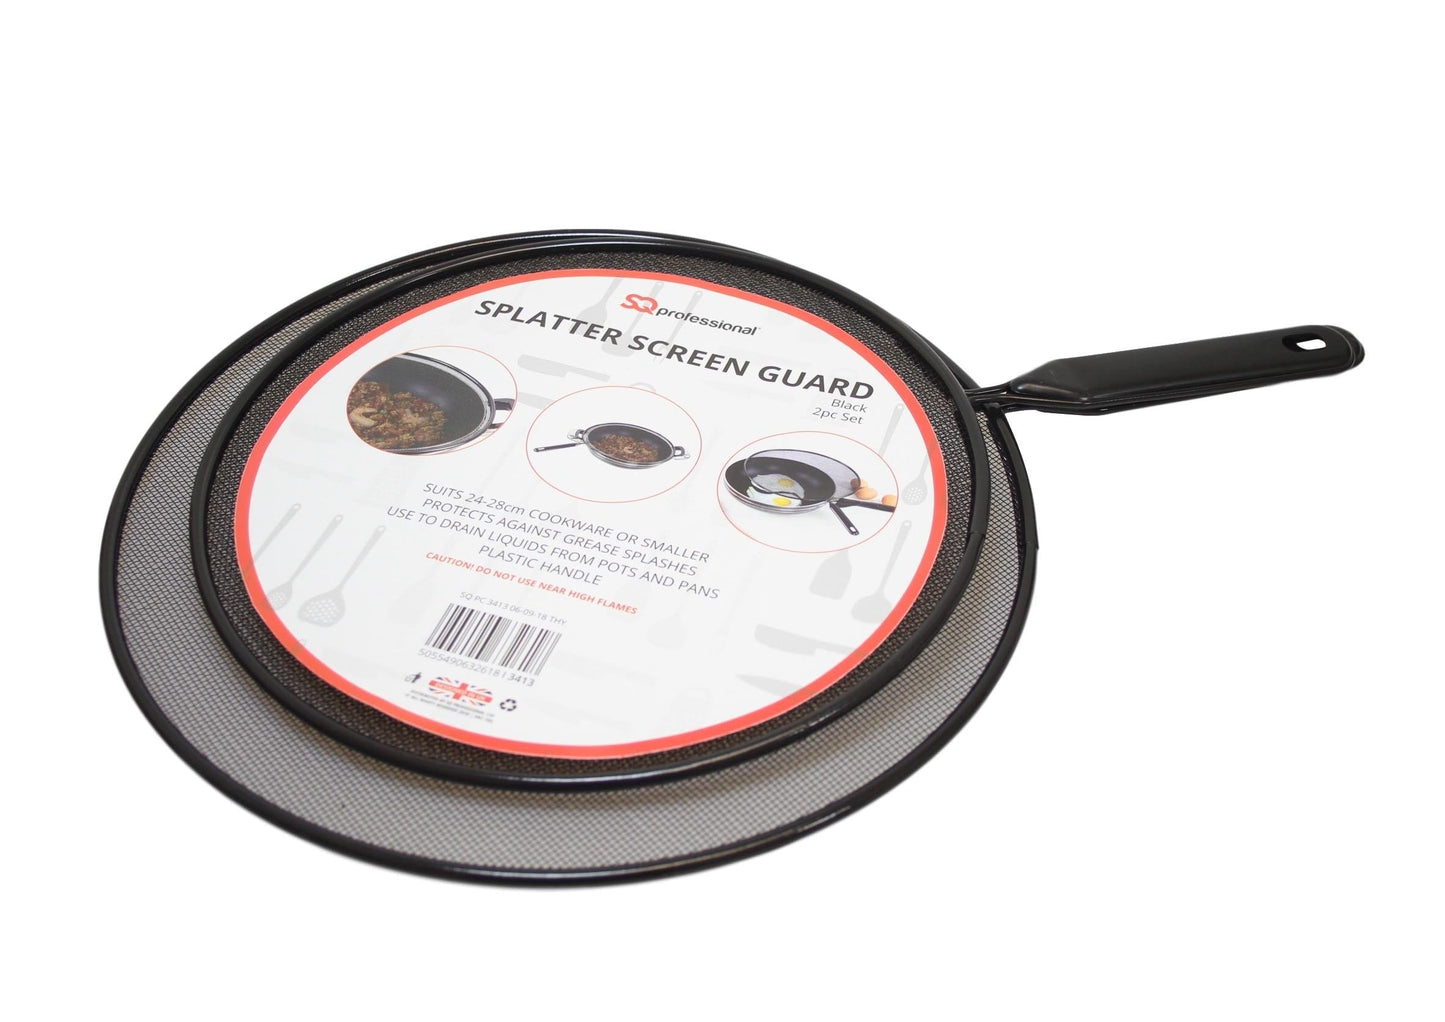 Metal Mesh Splatter Screen Food Protector Cover Guard Black 2 Pack 9786 / 3413 A  (Parcel Rate)